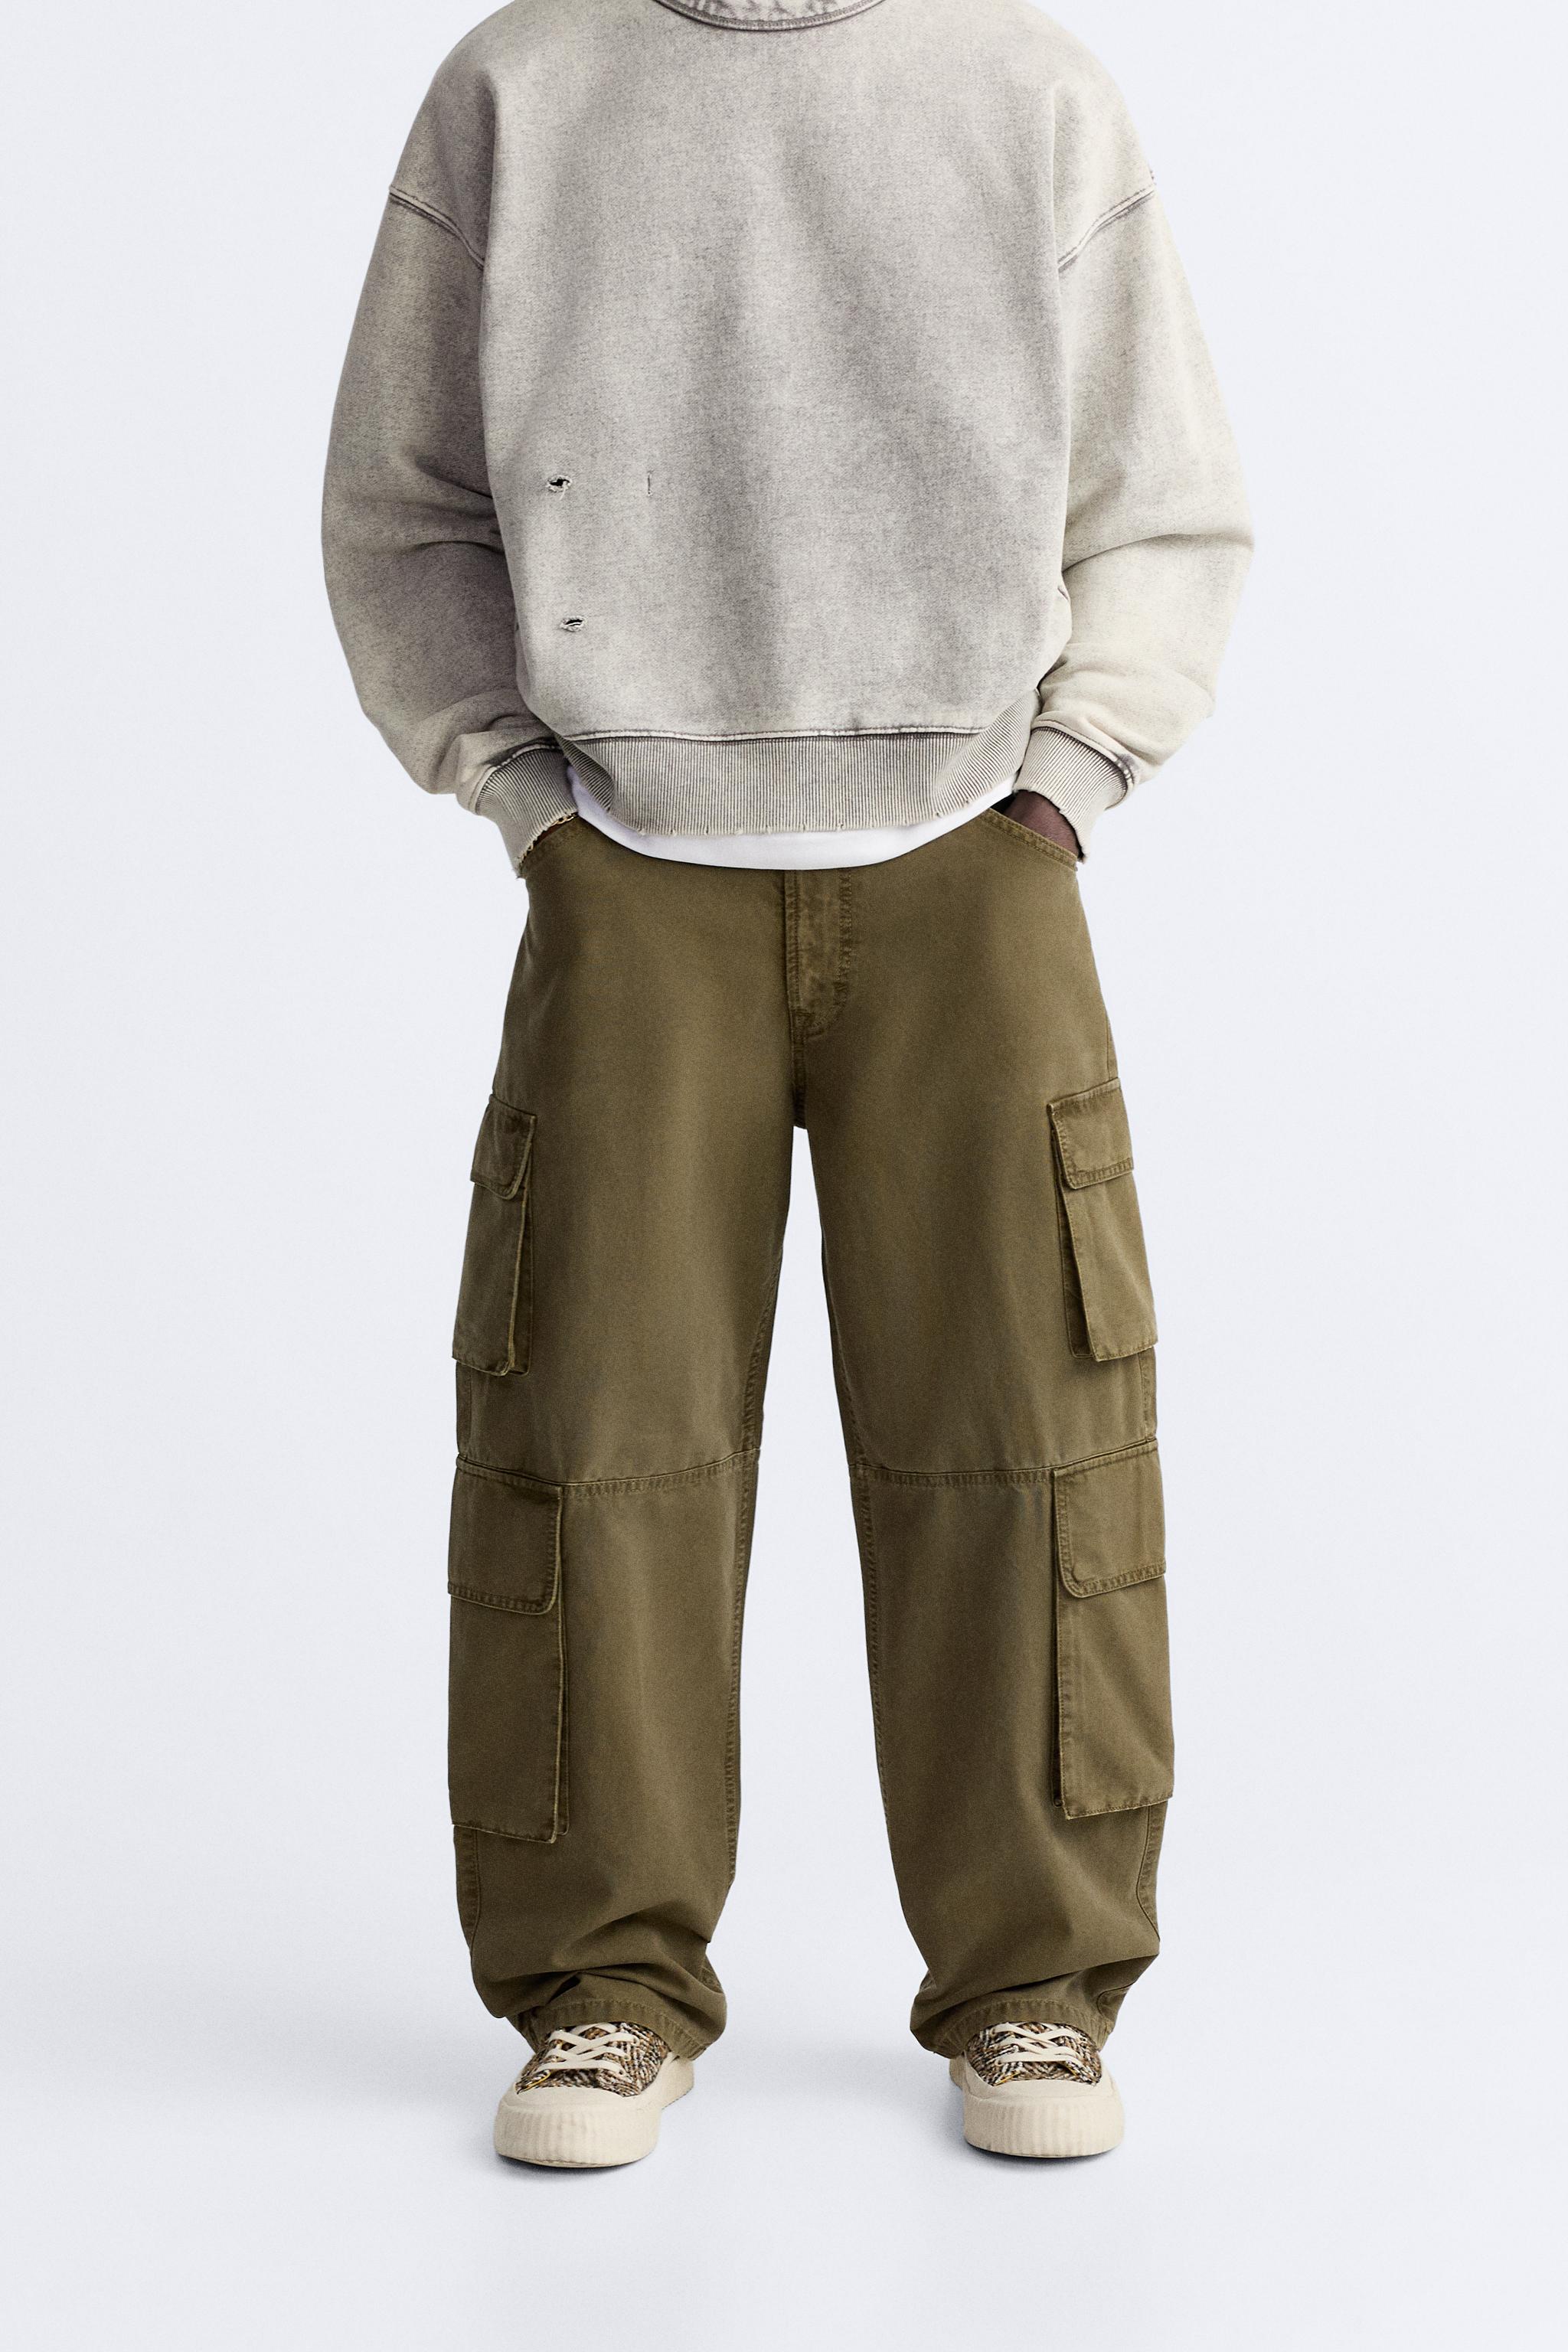 ZARA MAN CARGO Pants Like, Jogging Pants with Pockets, Army Green Khaki,  Size XL $45.25 - PicClick